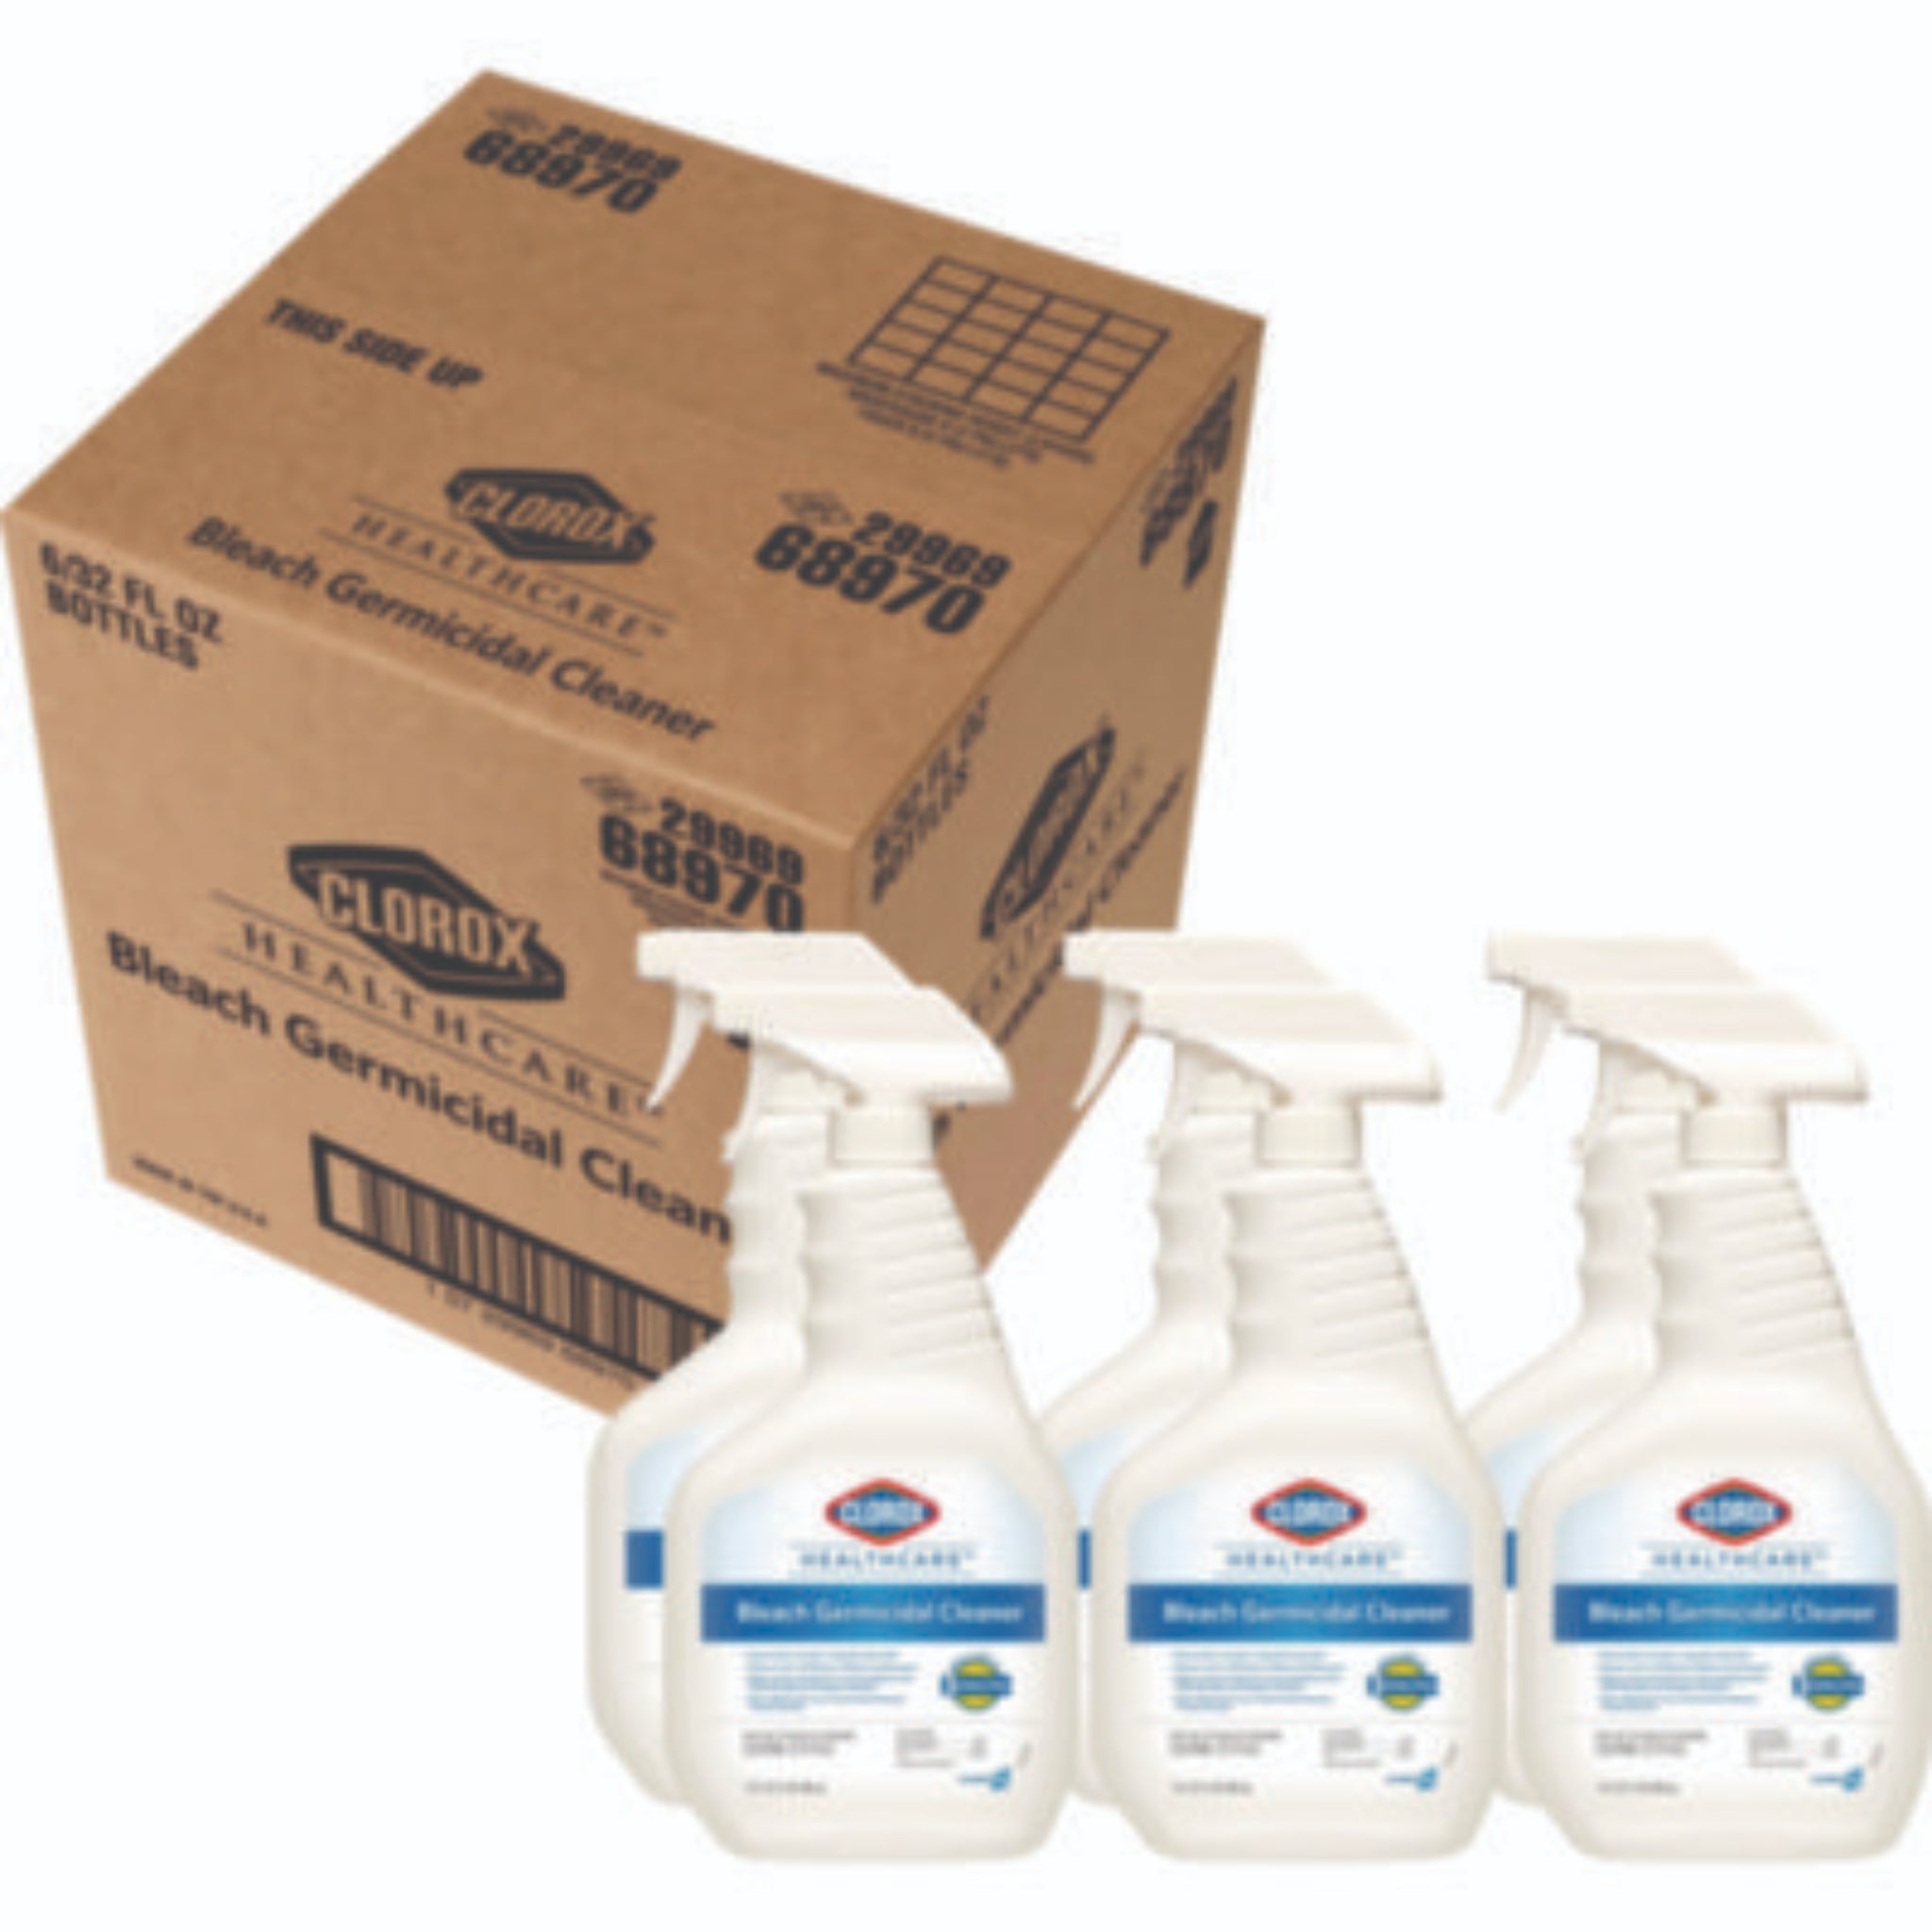 CLOROX SALES CO. CLO68970 Bleach Germicidal Cleaner, 32 Oz Spray Bottle, Carton of 6